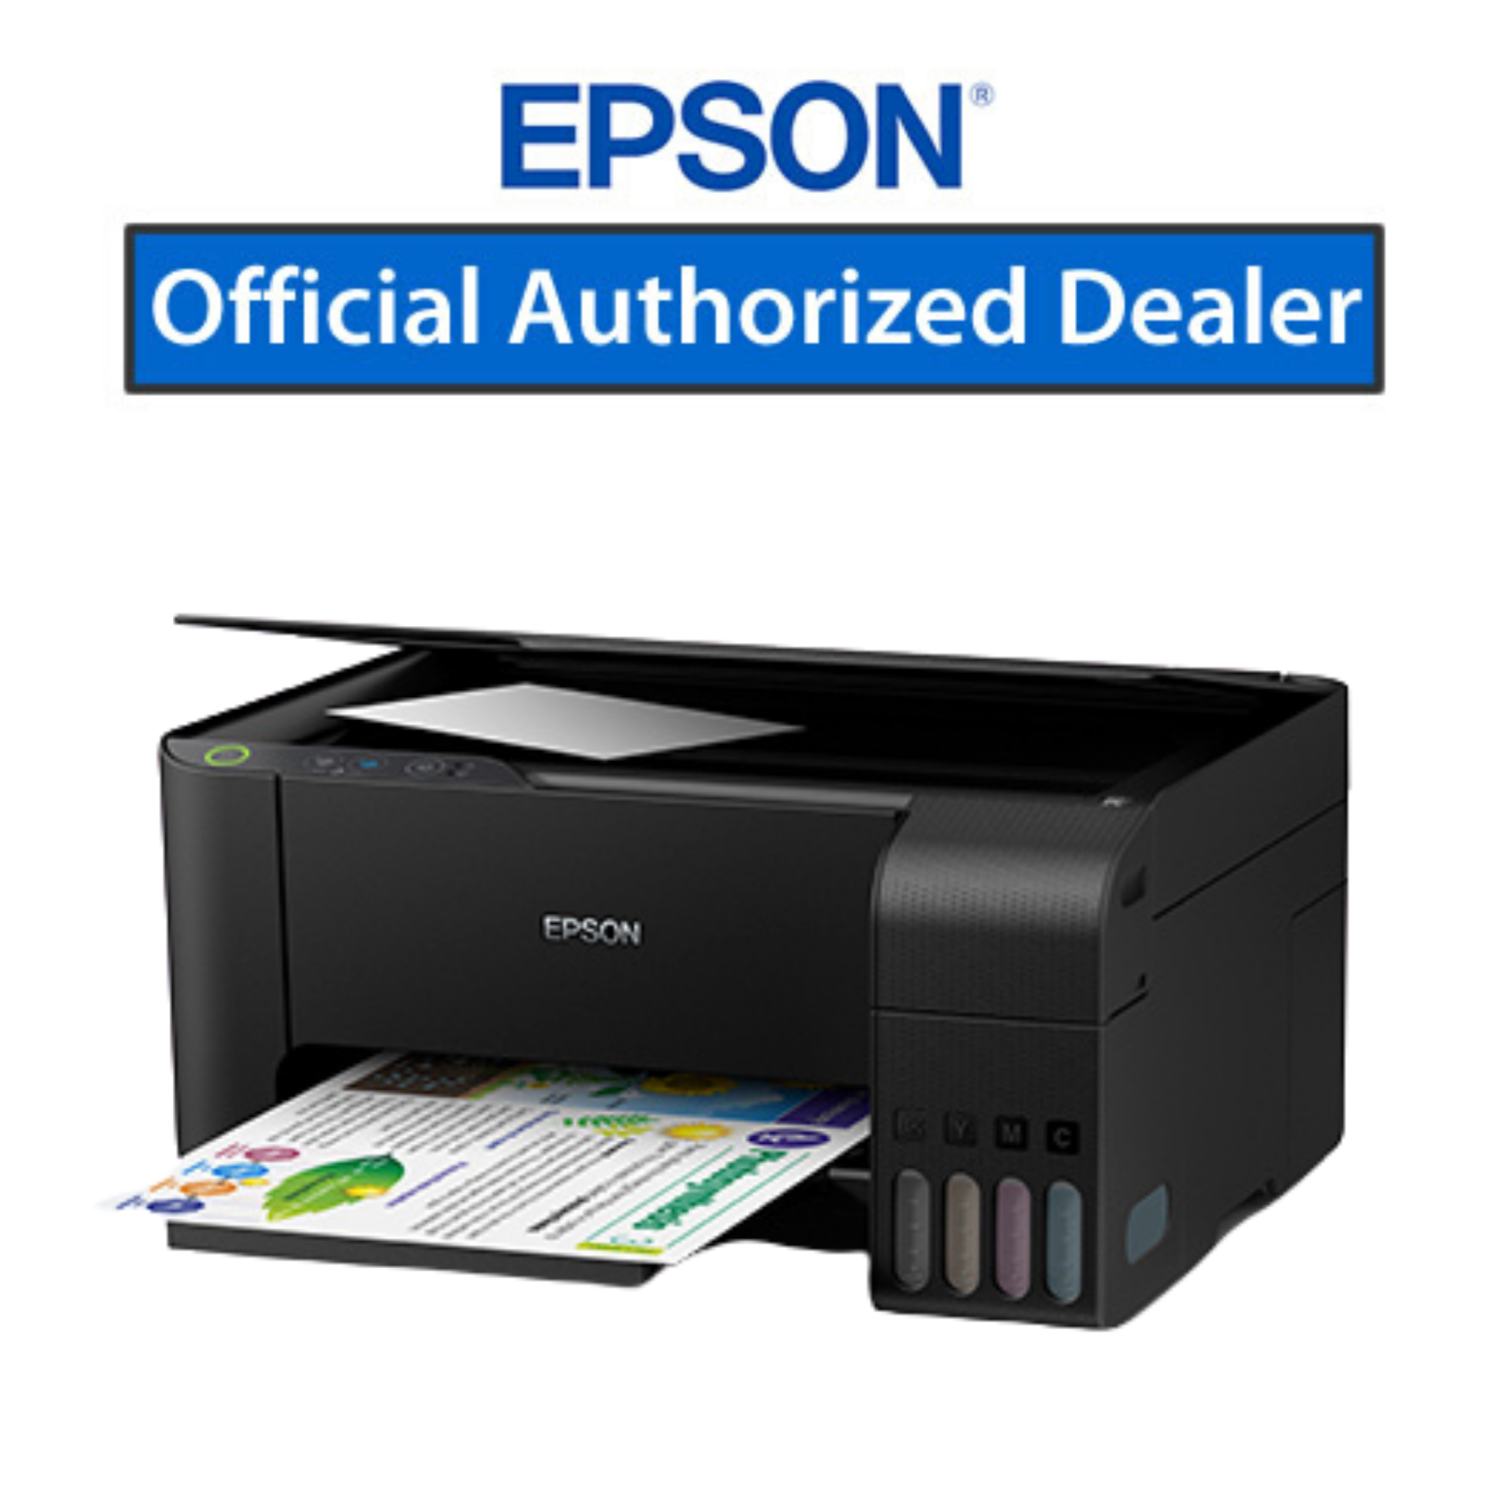 Epson ECOTANK l3210. Принтер Epson 3110. Принтер Epson 3210. МФУ + СНПЧ ECOTANK Epson l3210.